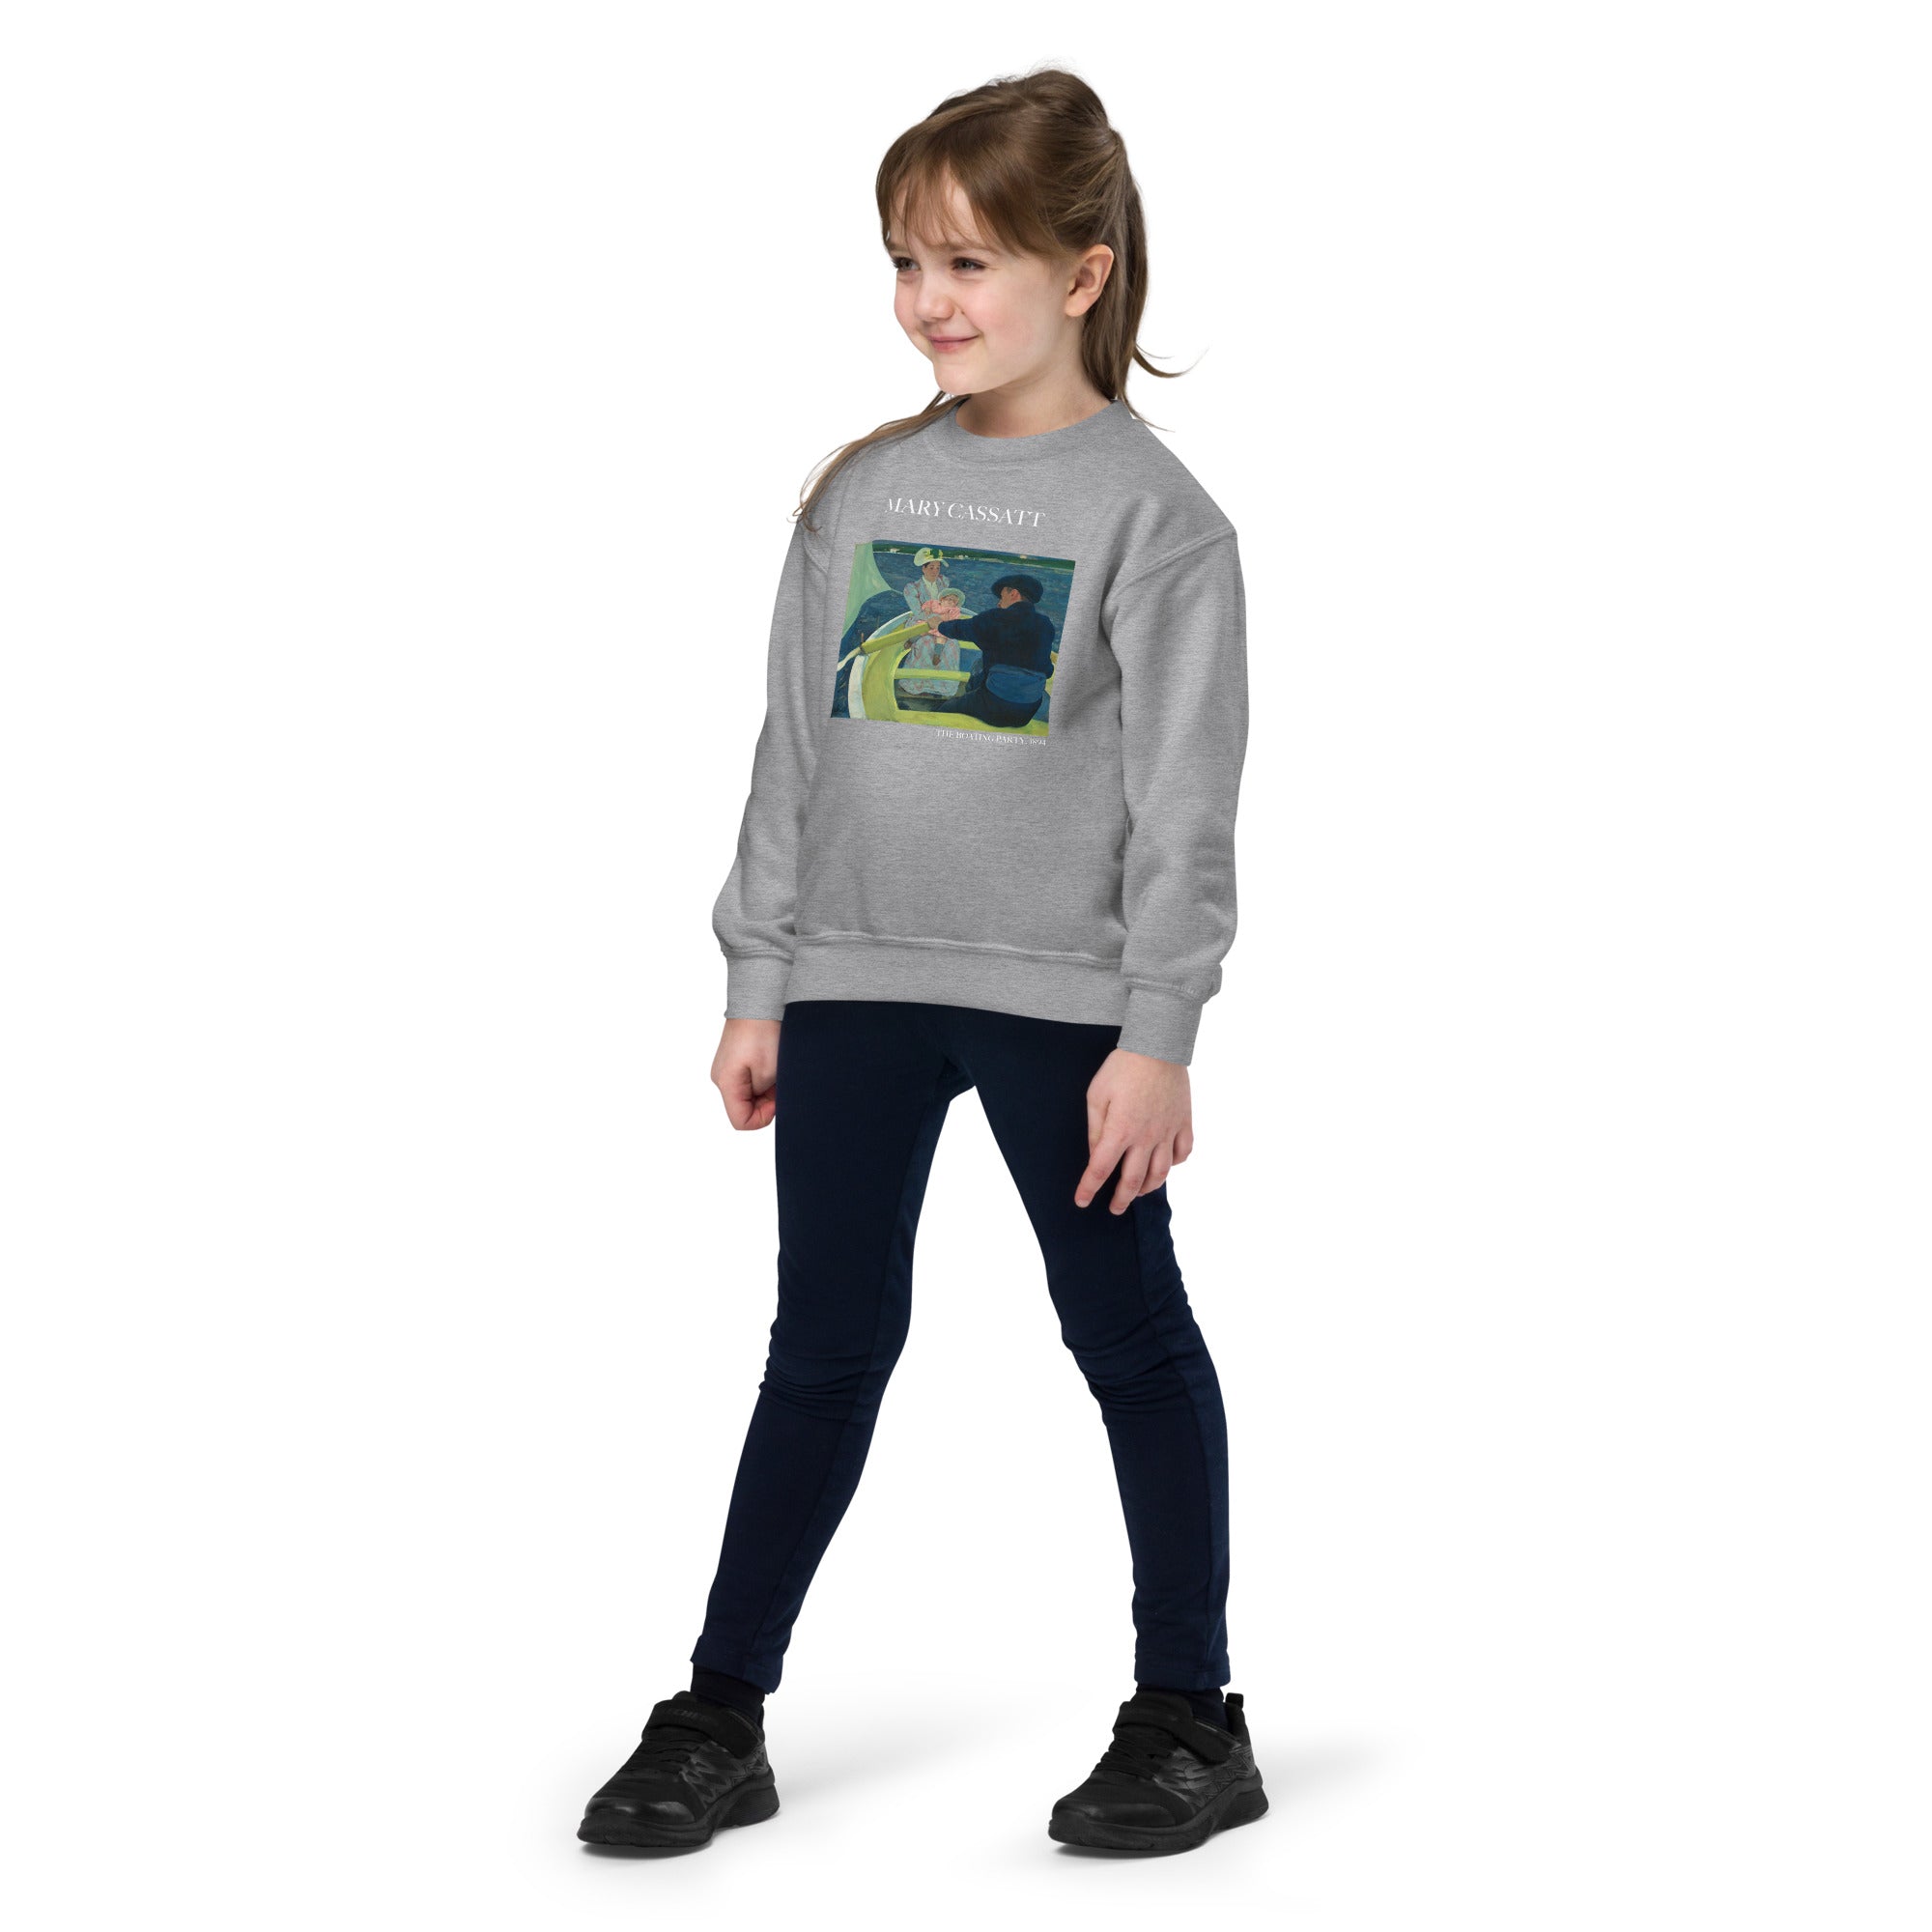 Mary Cassatt 'The Boating Party' Famous Painting Crewneck Sweatshirt | Premium Youth Art Sweatshirt